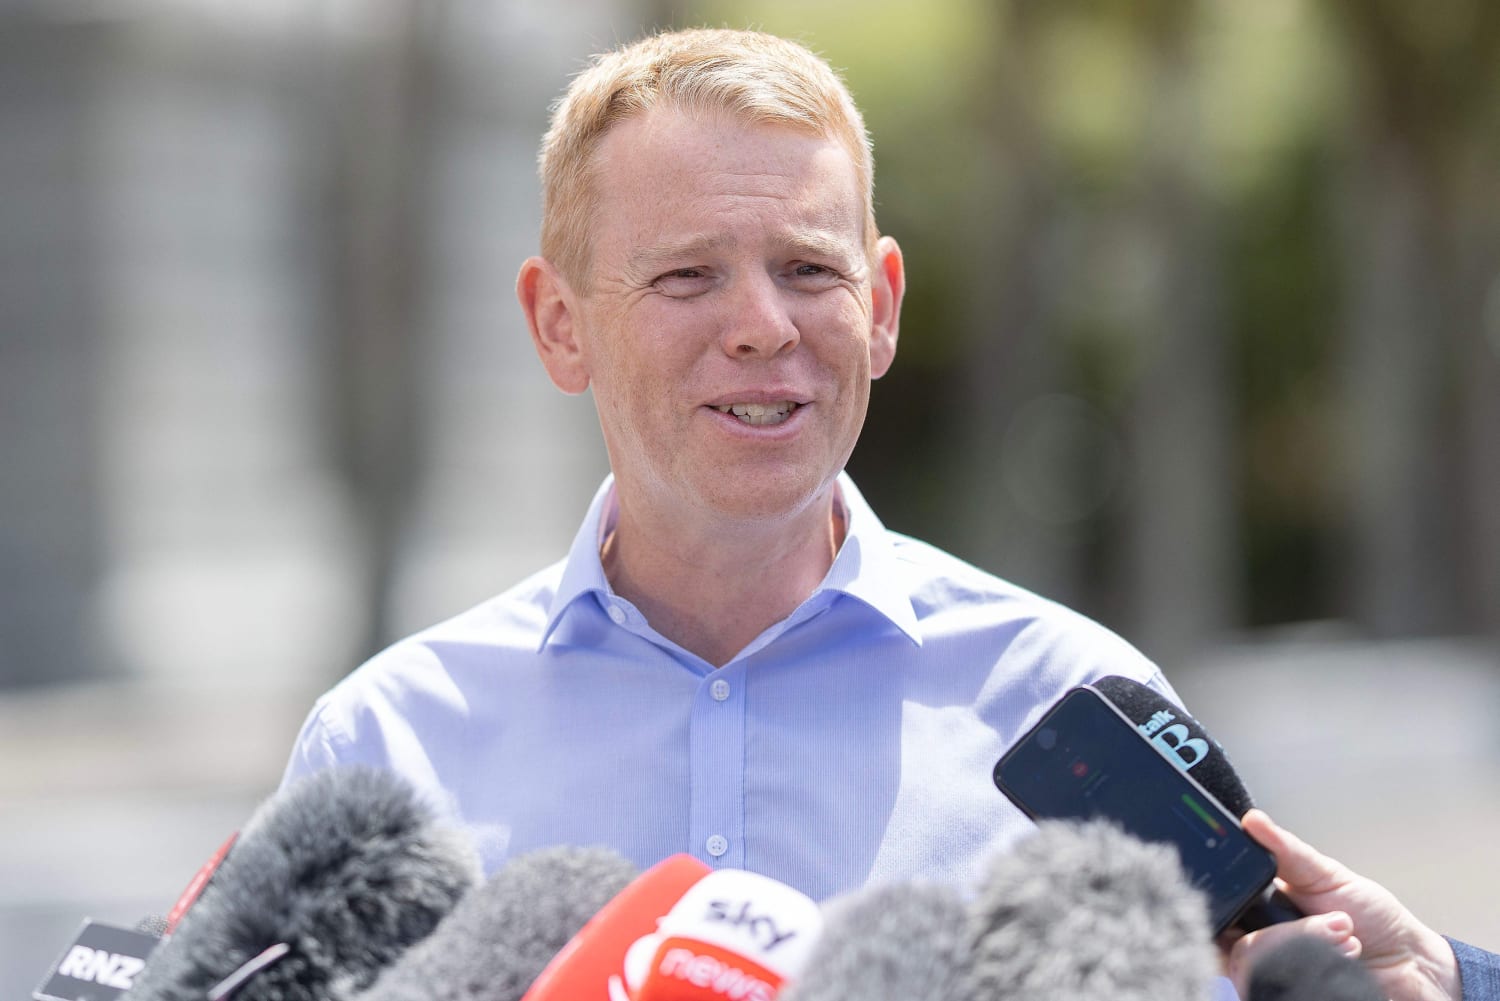 Meet the man set to replace Jacinda Ardern as New Zealand PM